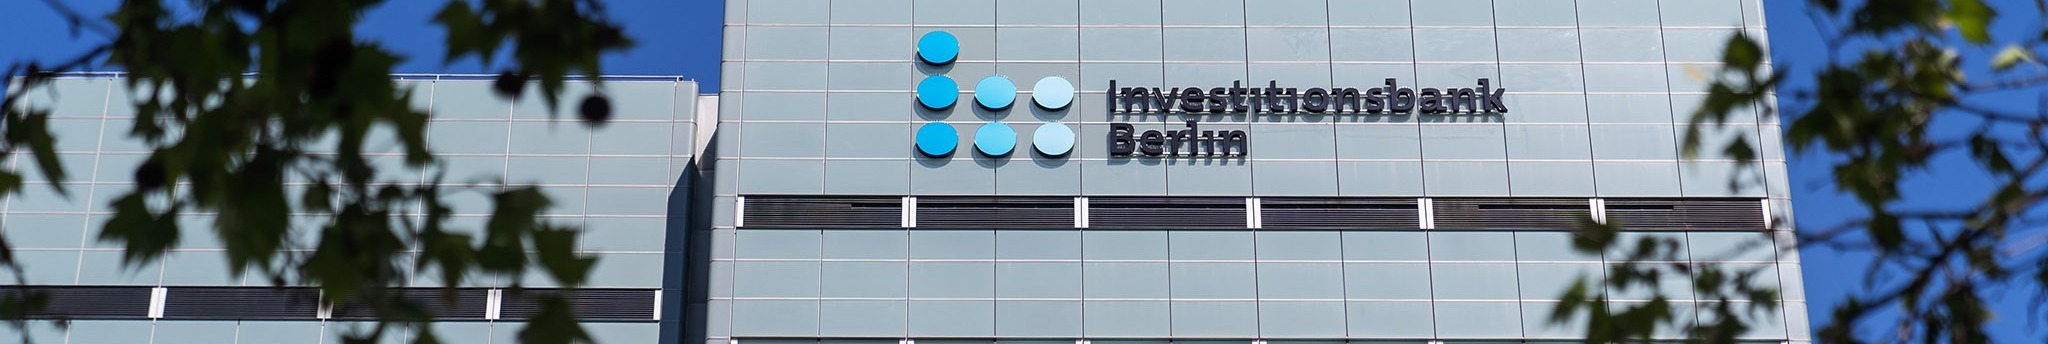 Investitionsbank Berlin background